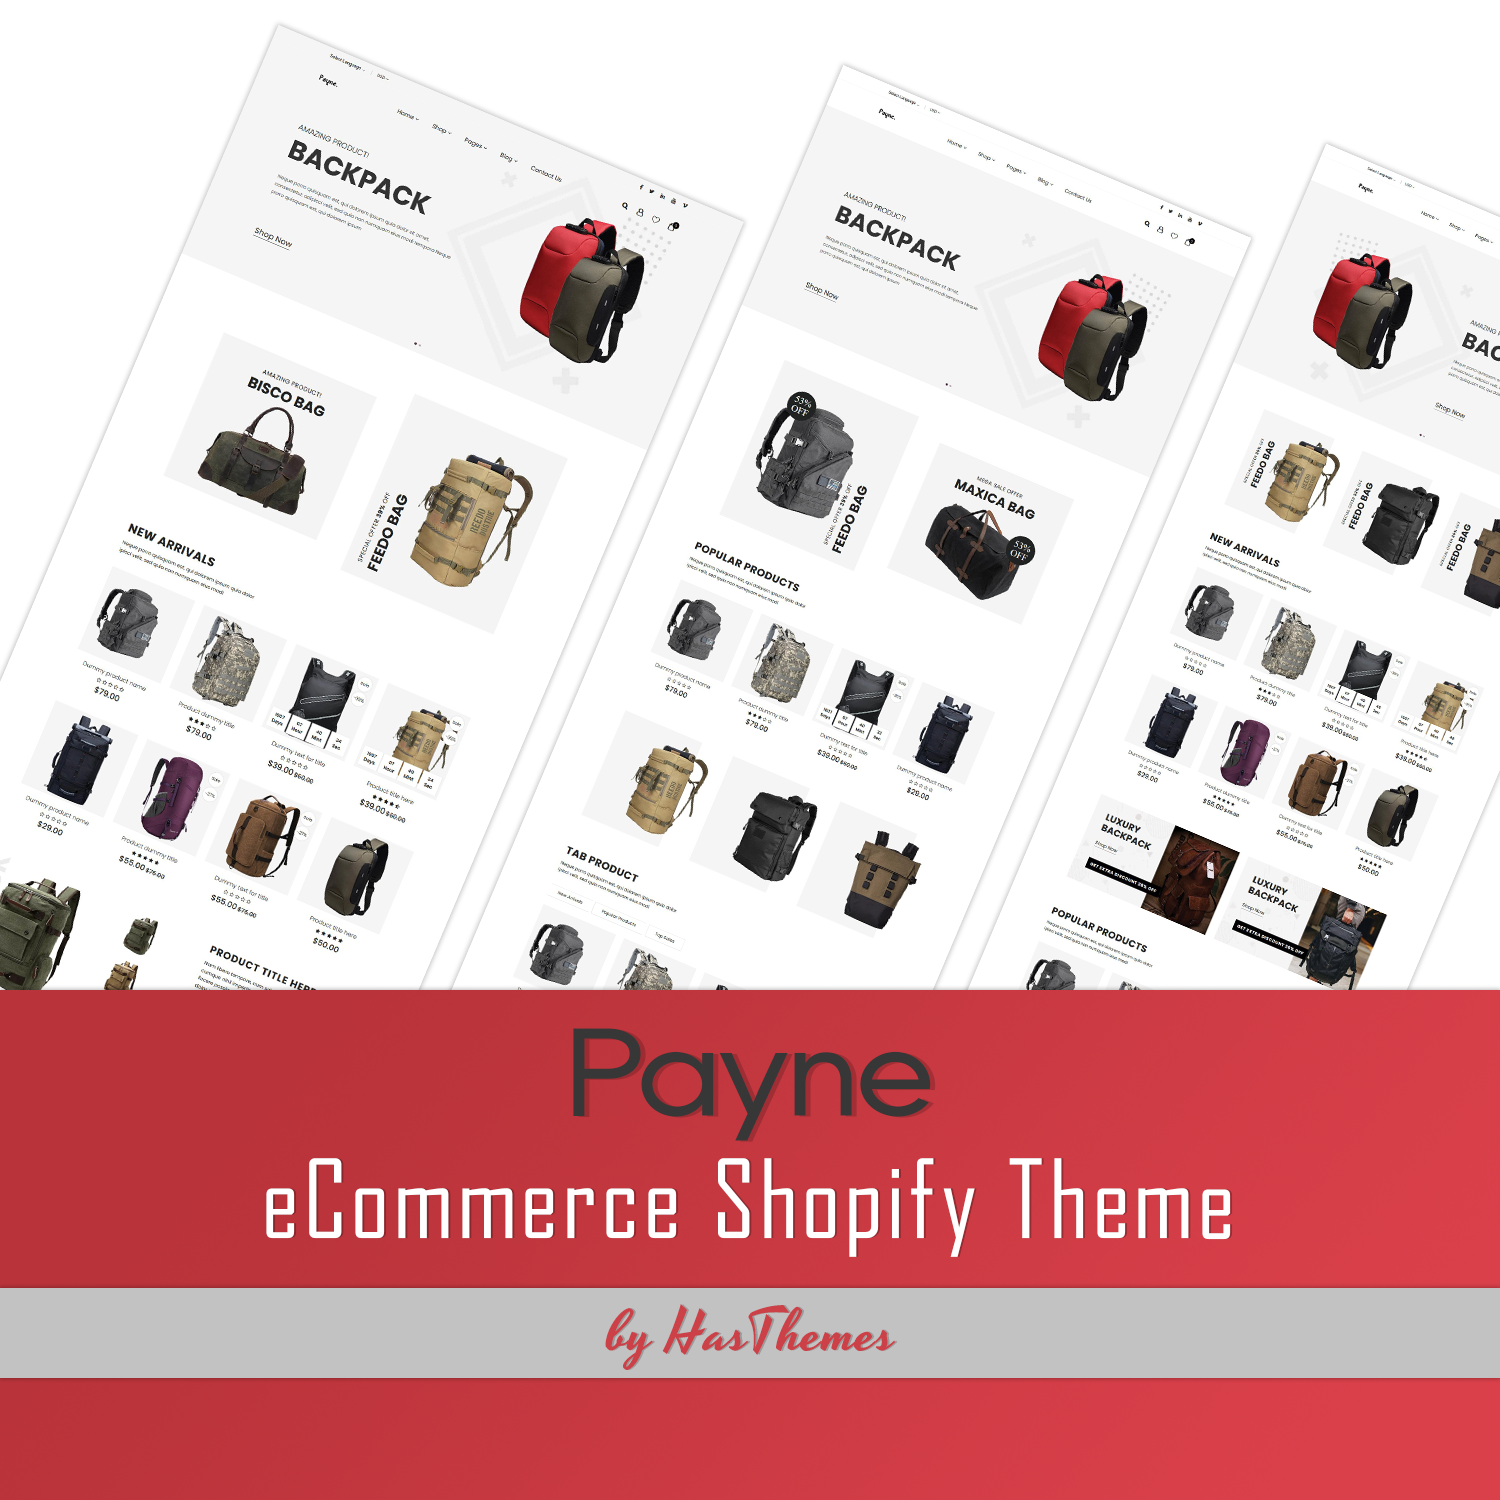 Preview ecommerce shopify theme payne.